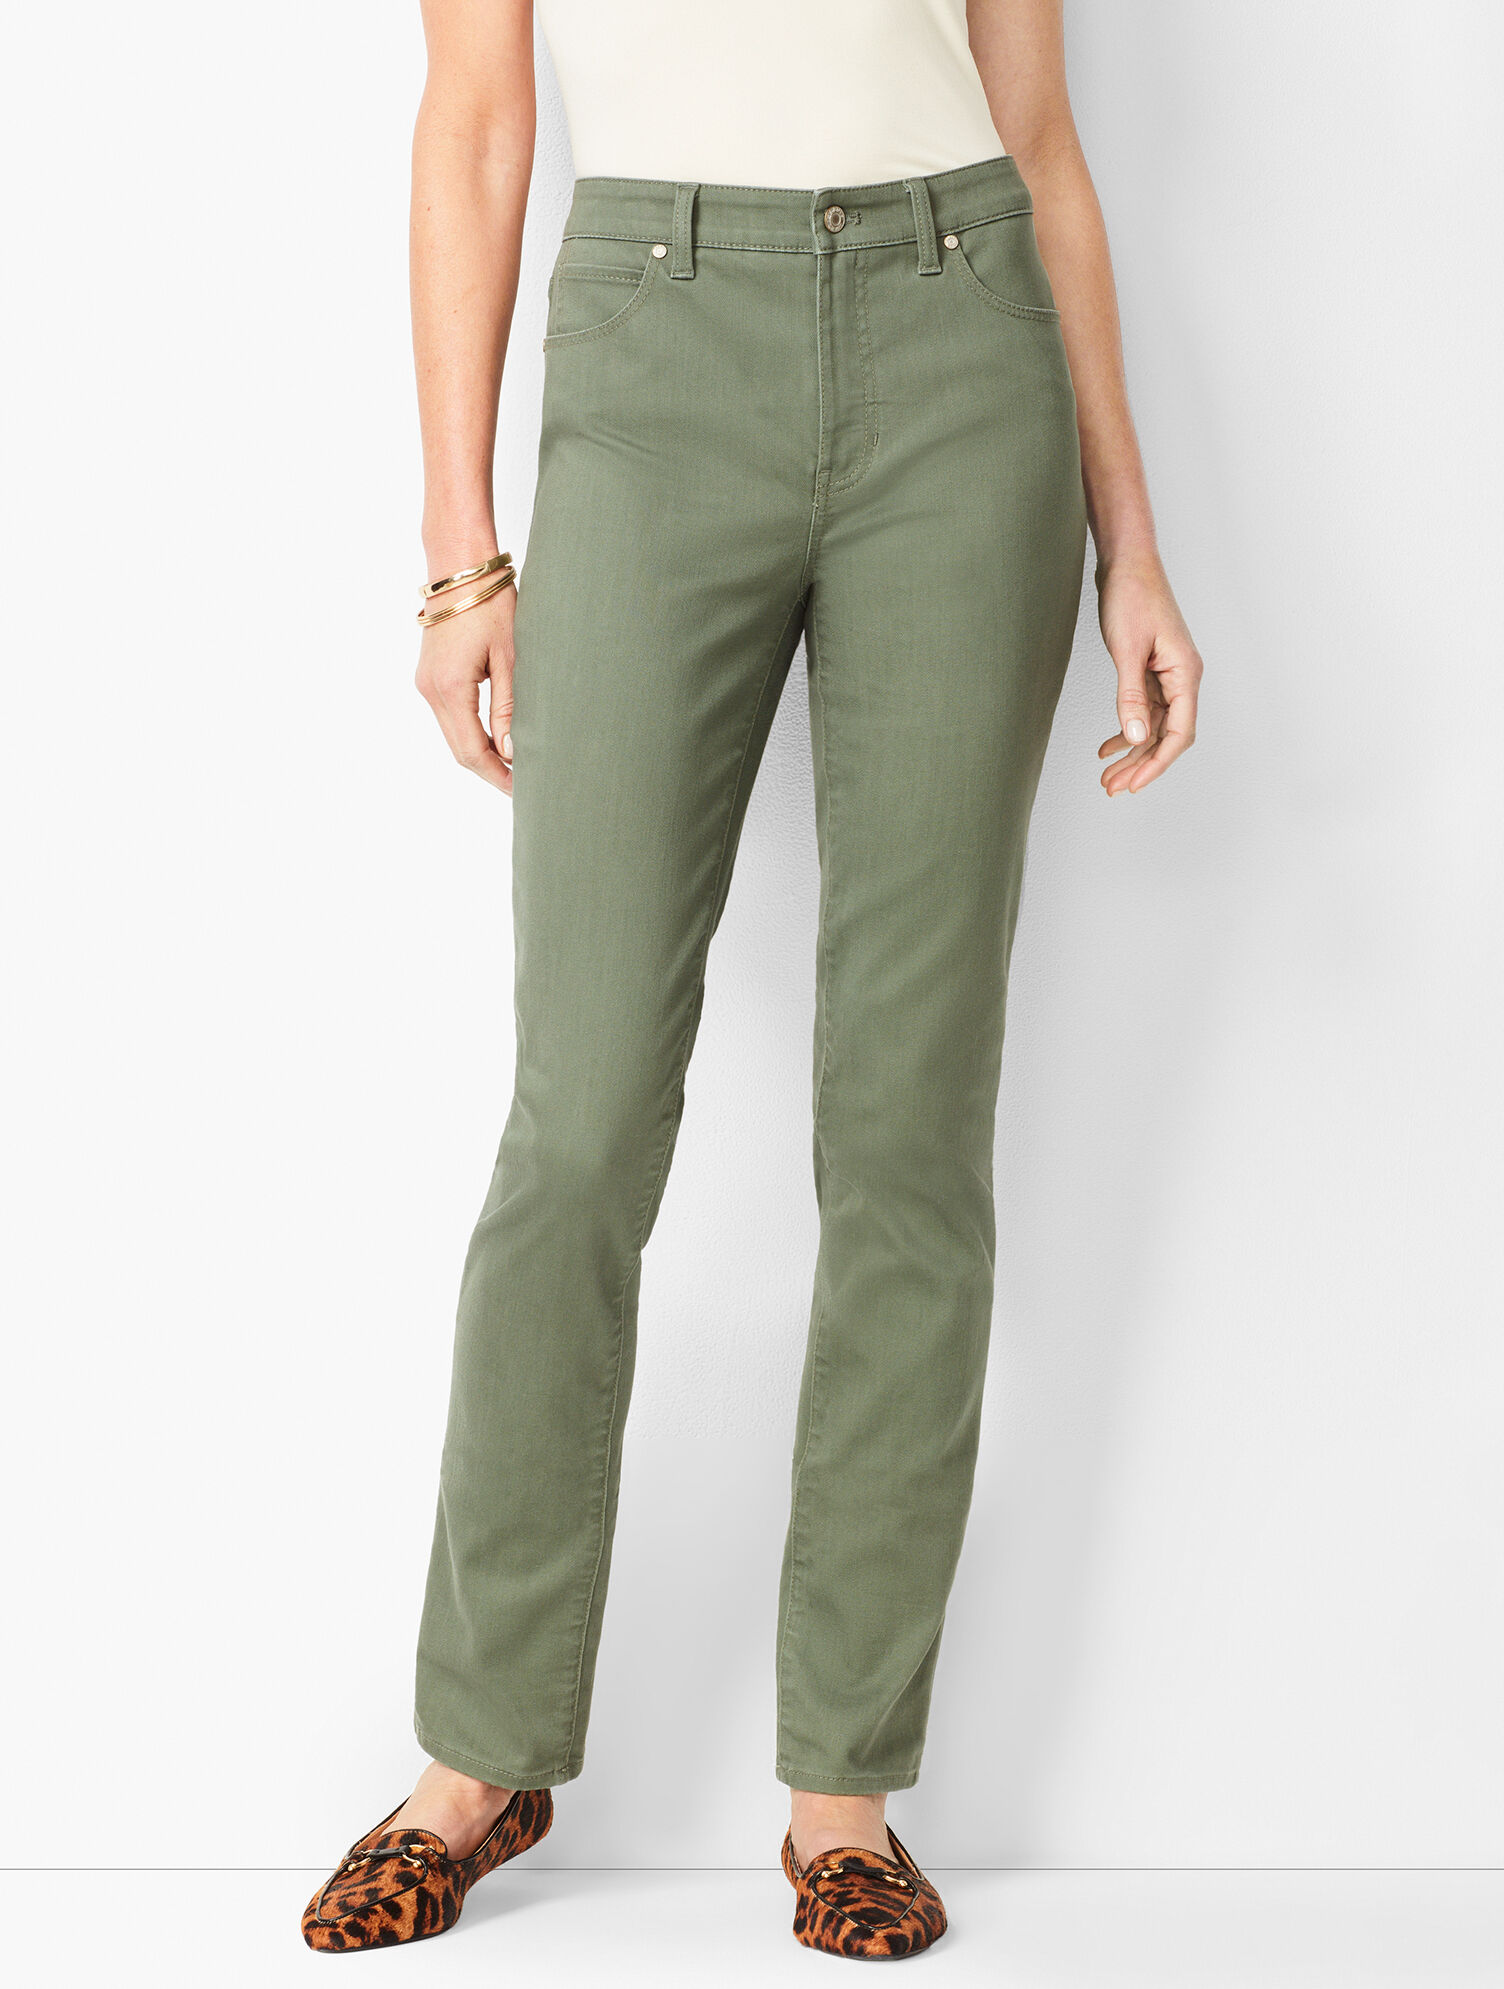 Sage Green Pants - High-Rise Trouser Pants - Straight Leg Pants